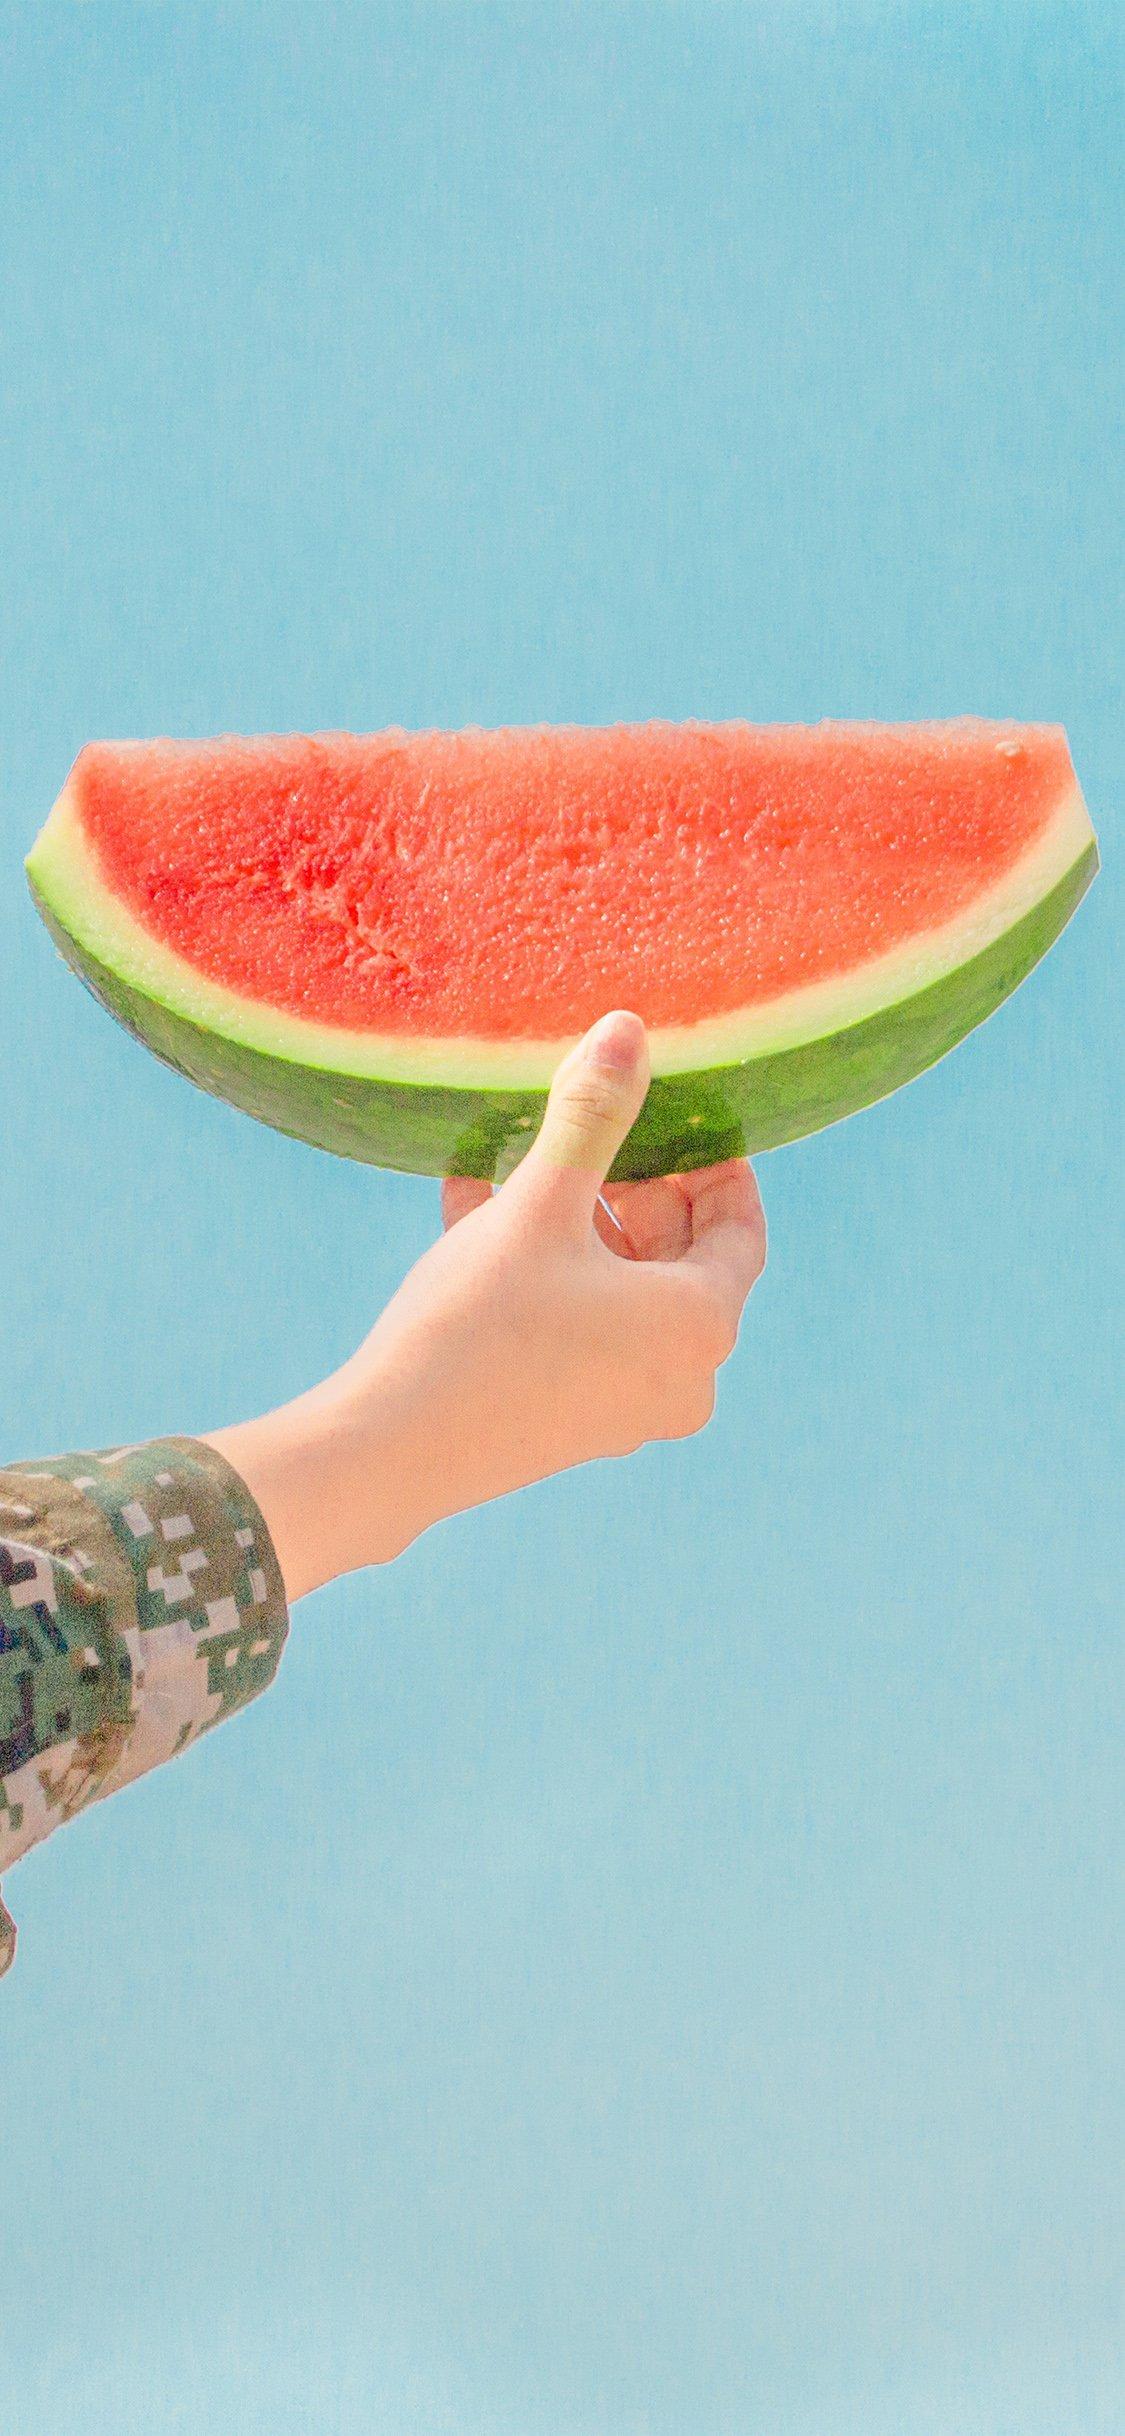 iPhone X wallpaper. watermelon summer food fruit happy